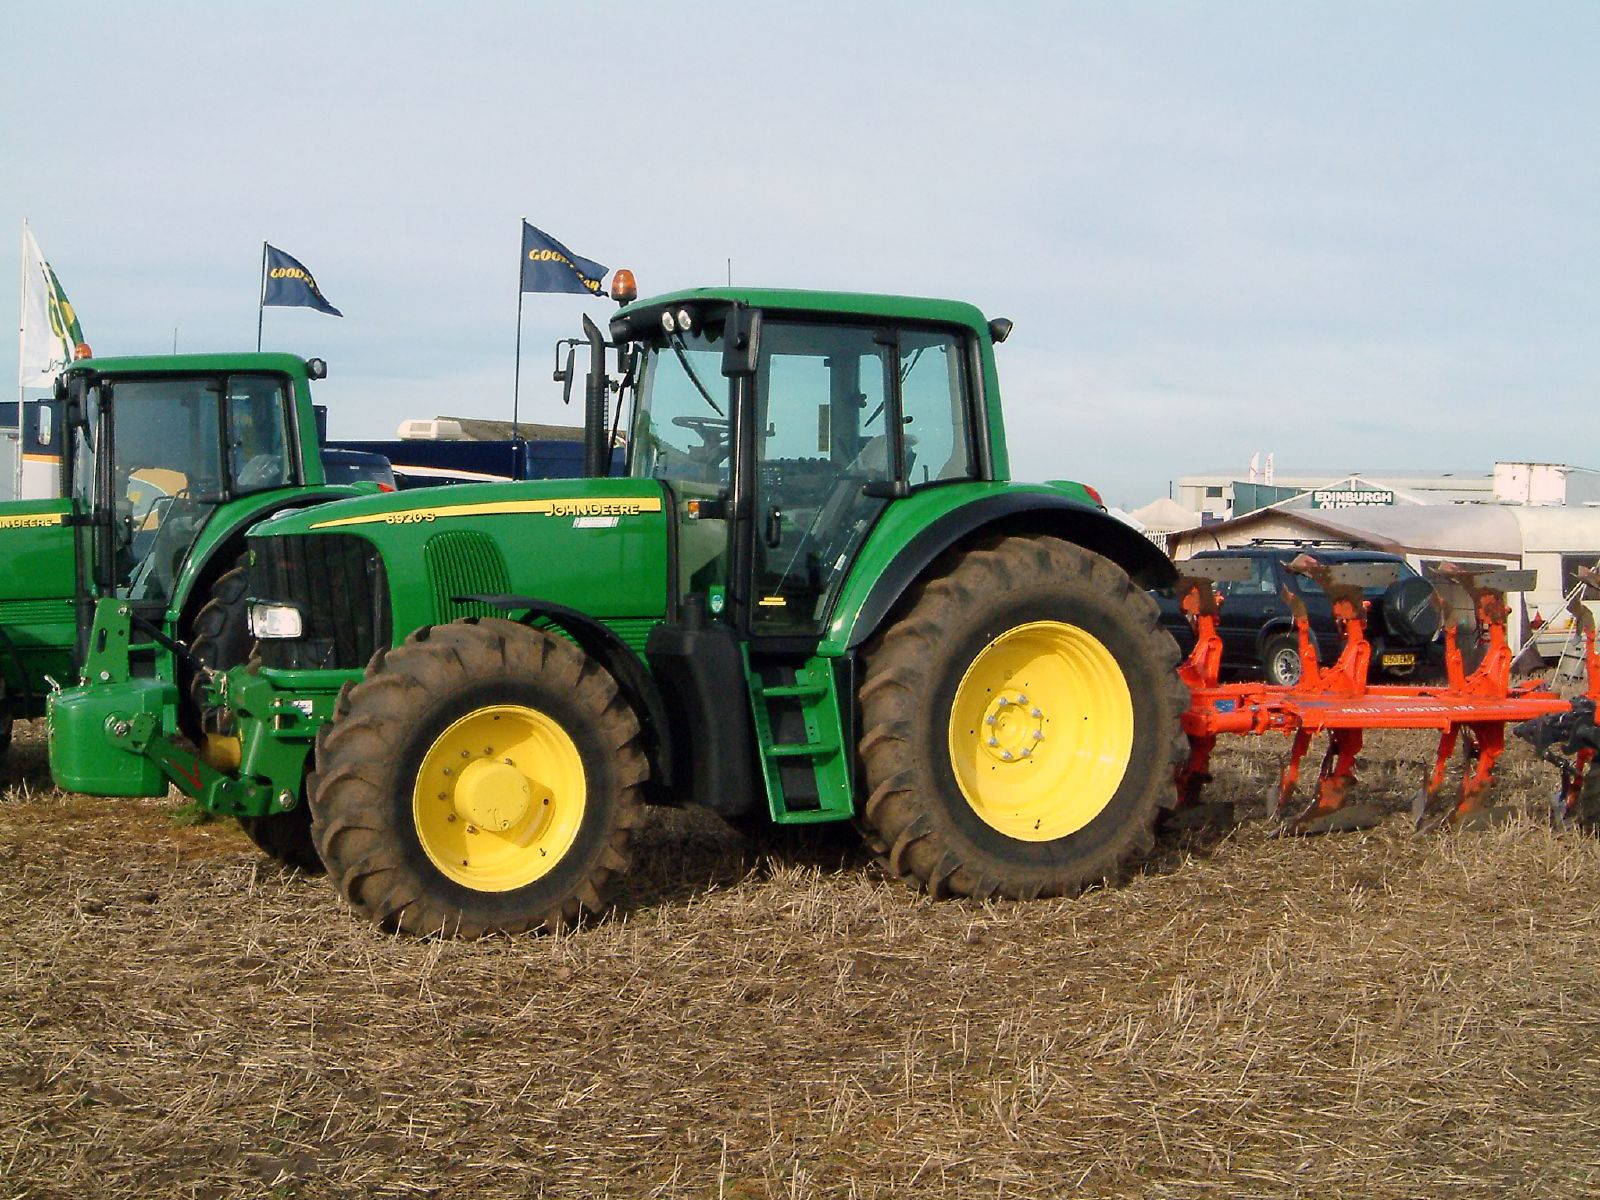 File:John Deere 6920 S tractor.jpg - Wikimedia Commons